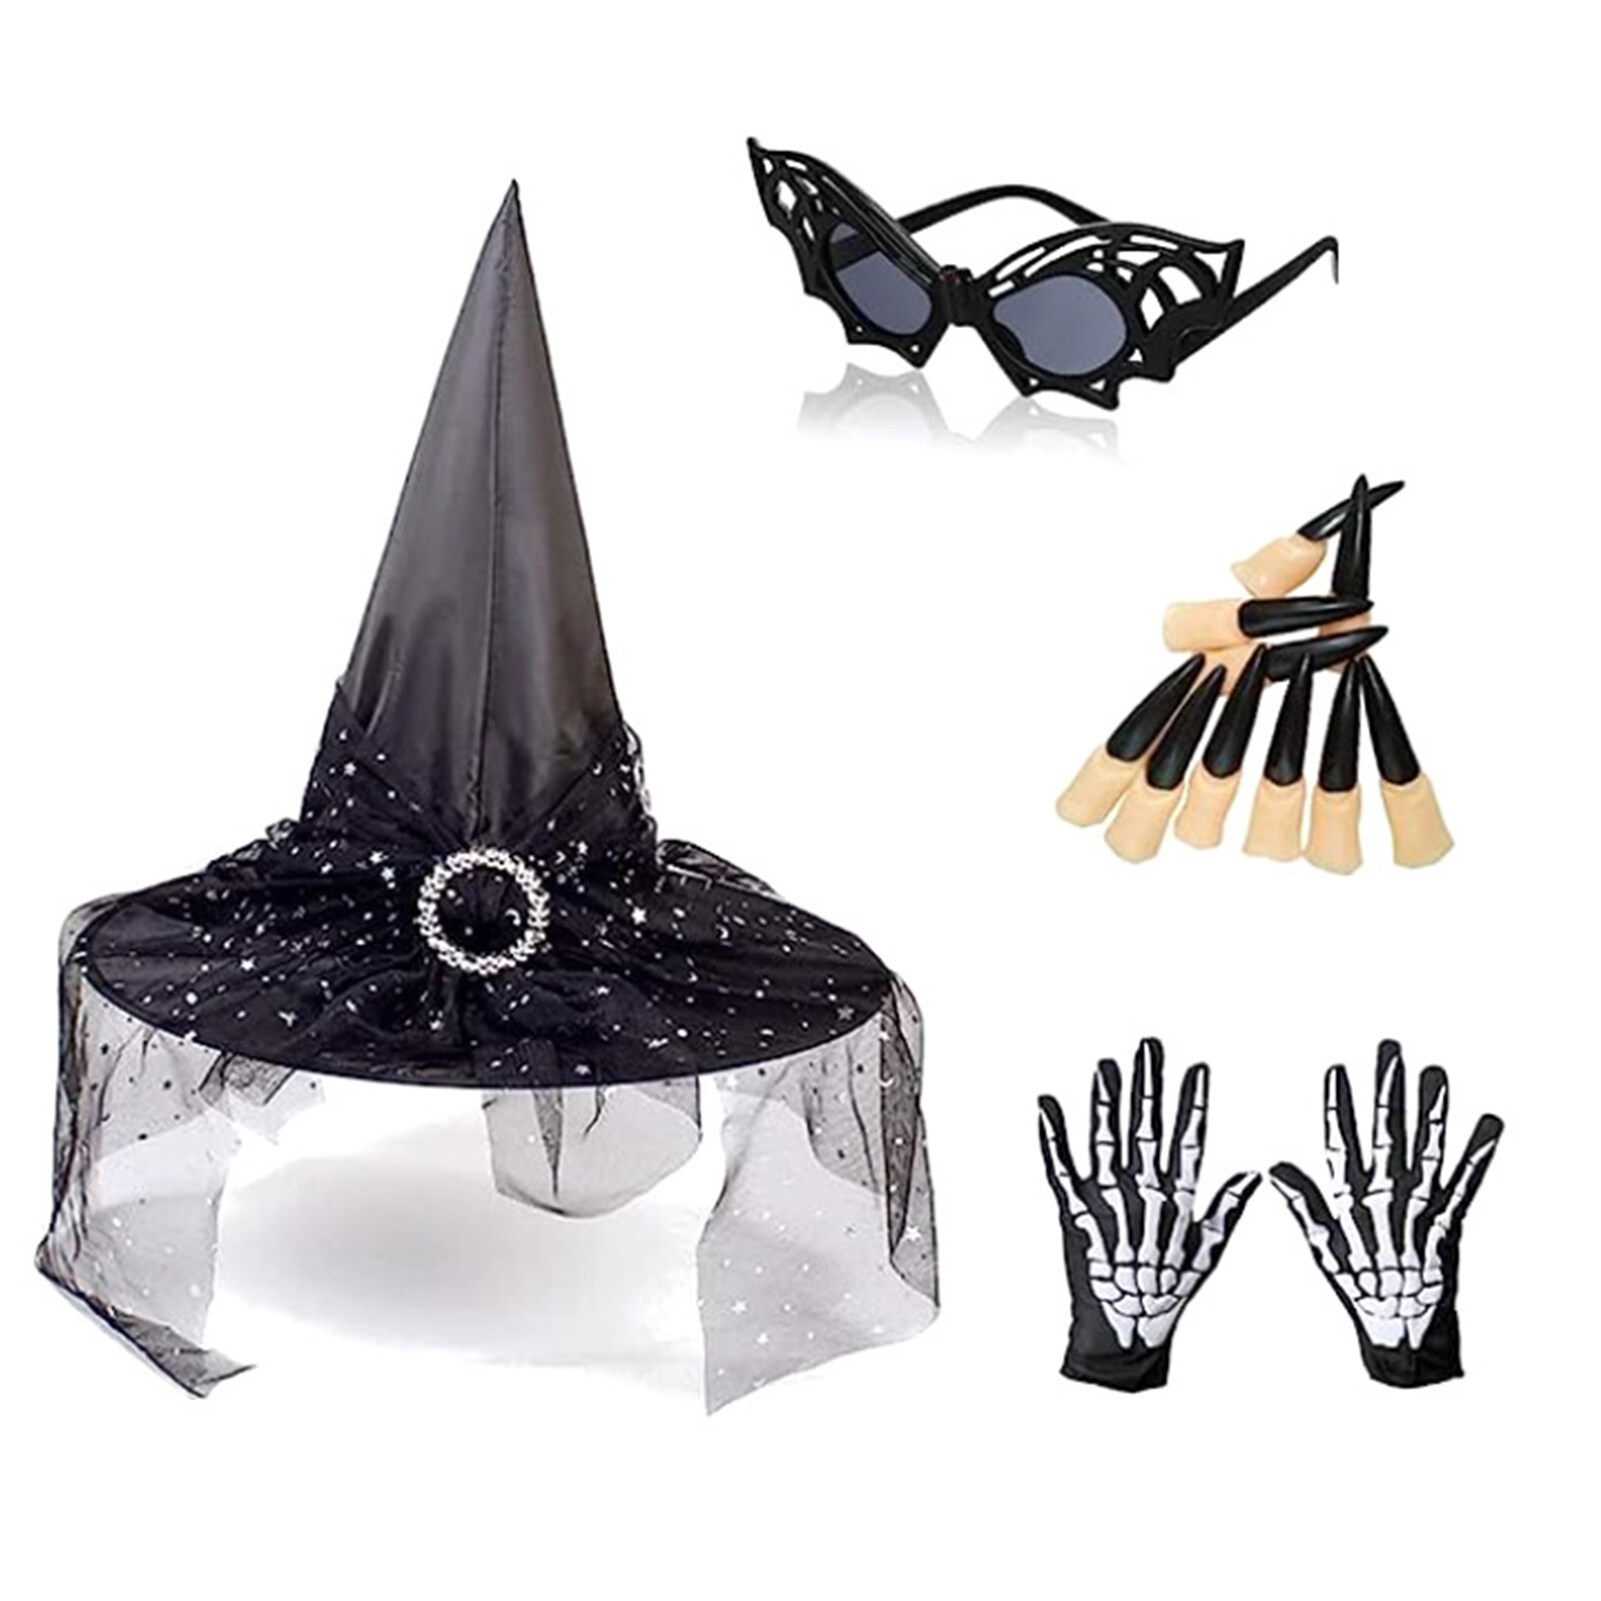 microgood 1 Set Wizard Costume Set Cosplay Prop Witch Hat Bat Glasses